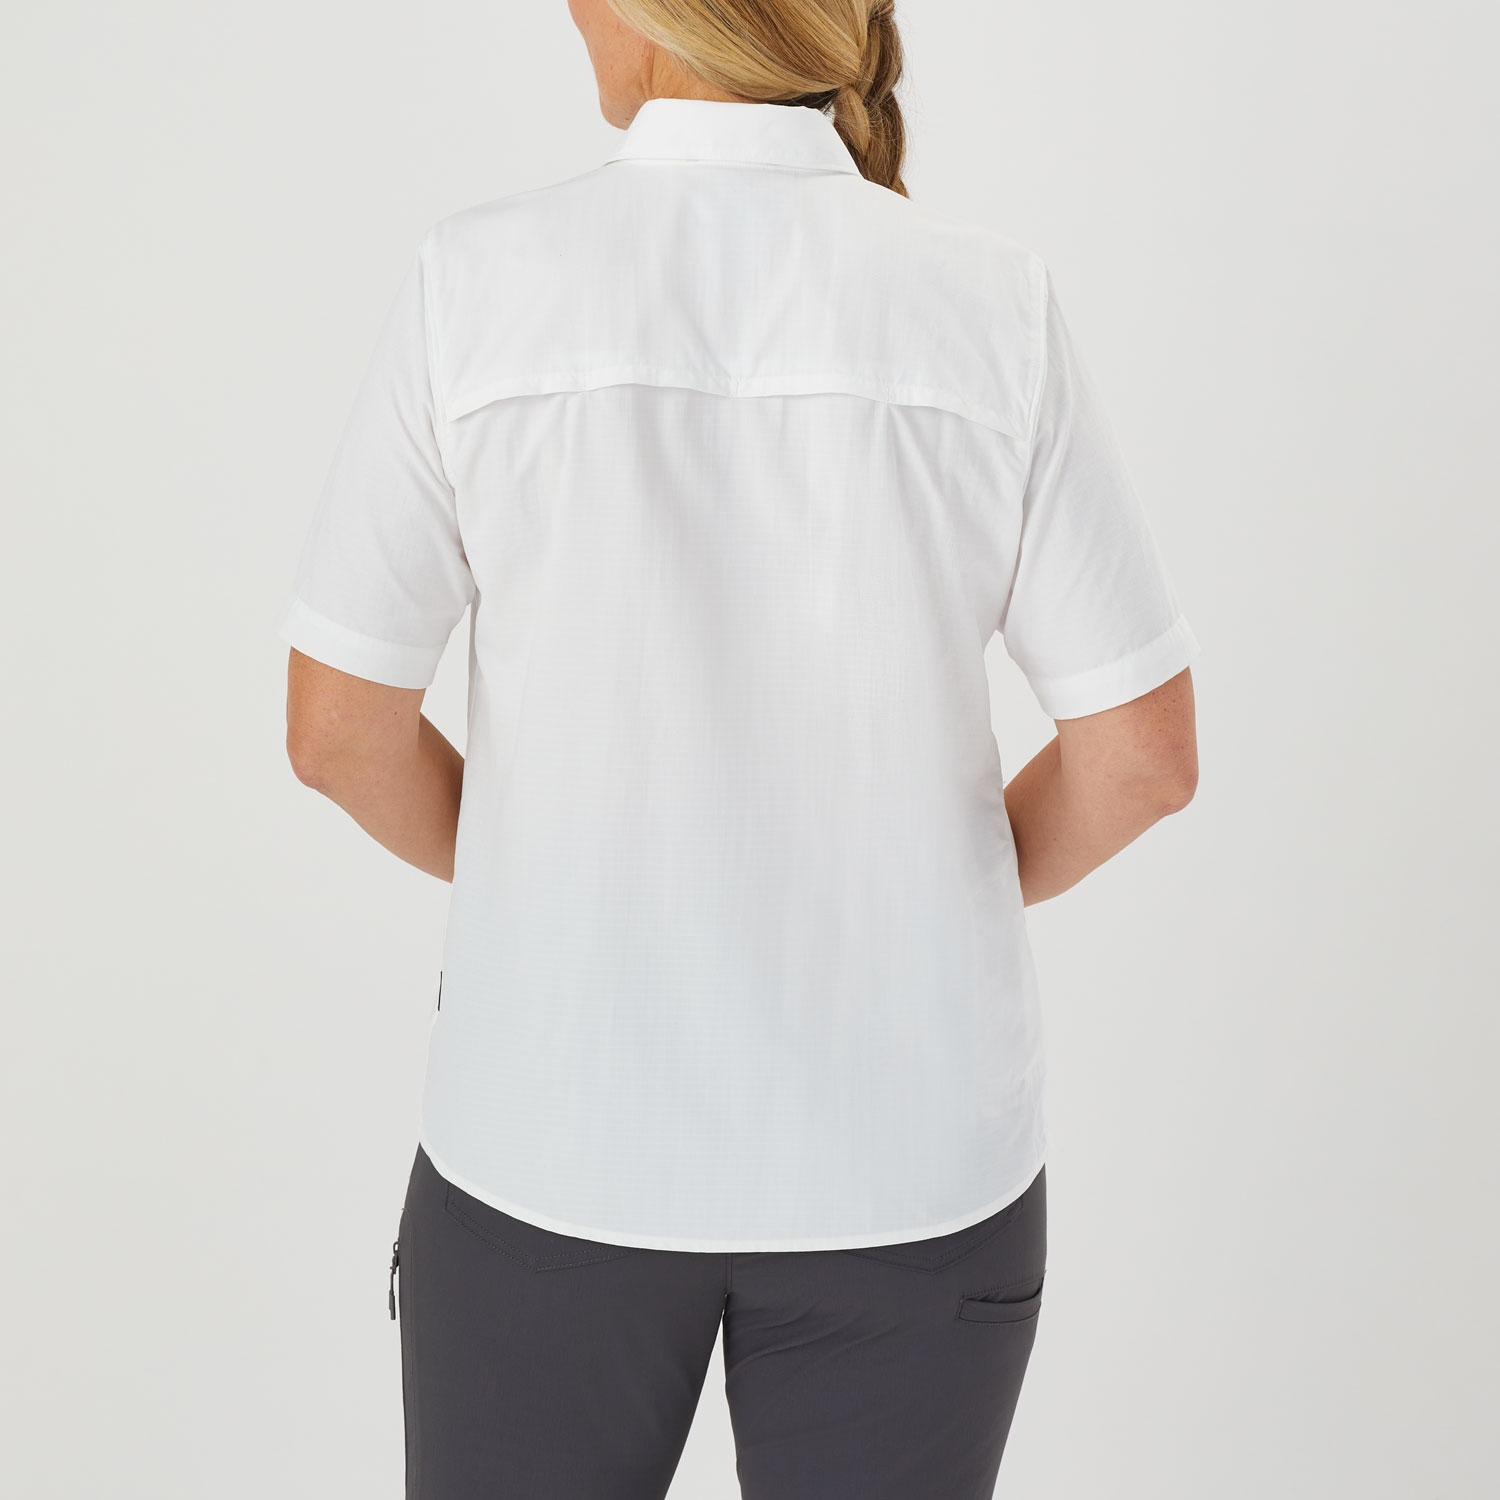 Women's AKHG Crooked River Short Sleeve Shirt